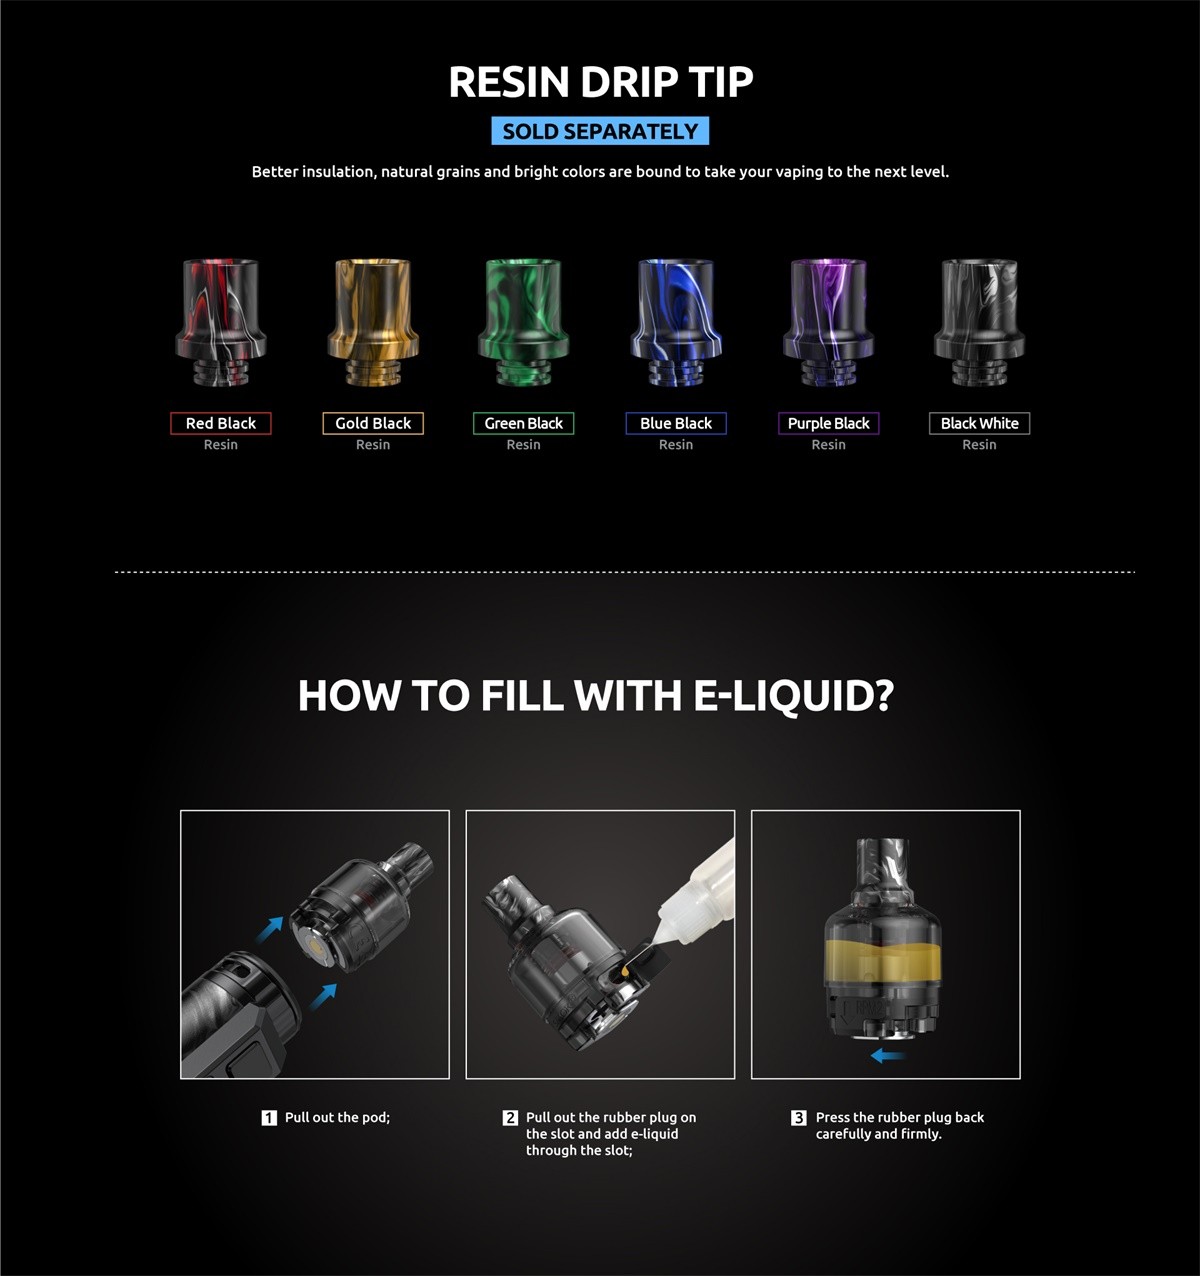 SMOK Thallo S Resin Drip Tip and E-juice Refilling